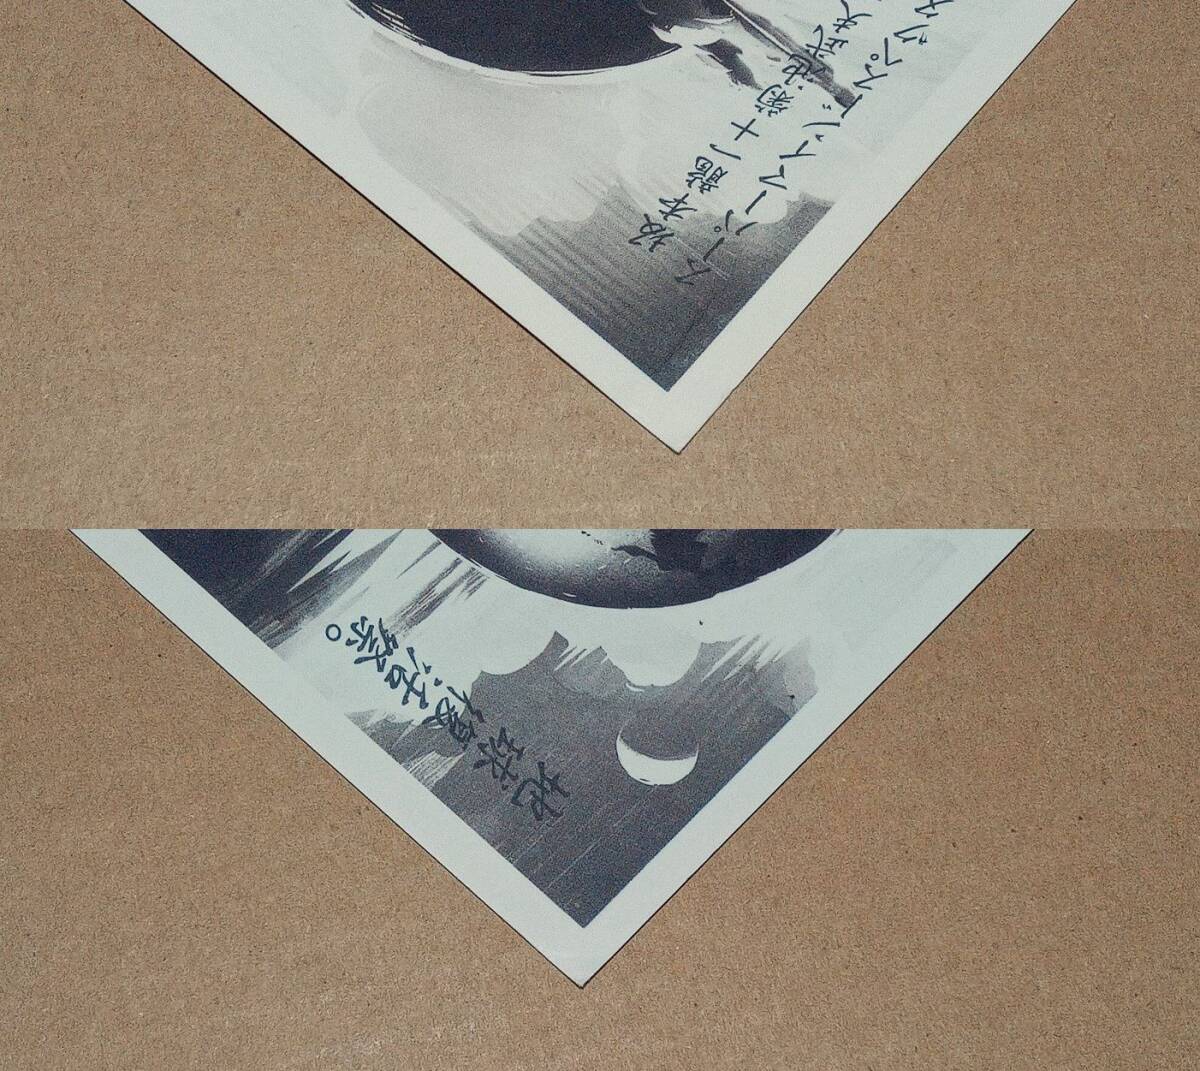 [ valuable ][ not for sale ] postcard * Sakamoto Ryuichi Kikuchi . Hara produce [ Cosmo Police COSMOPOLIS]* approximately 12cm×22cm*1984 year * leaflet Flyer 